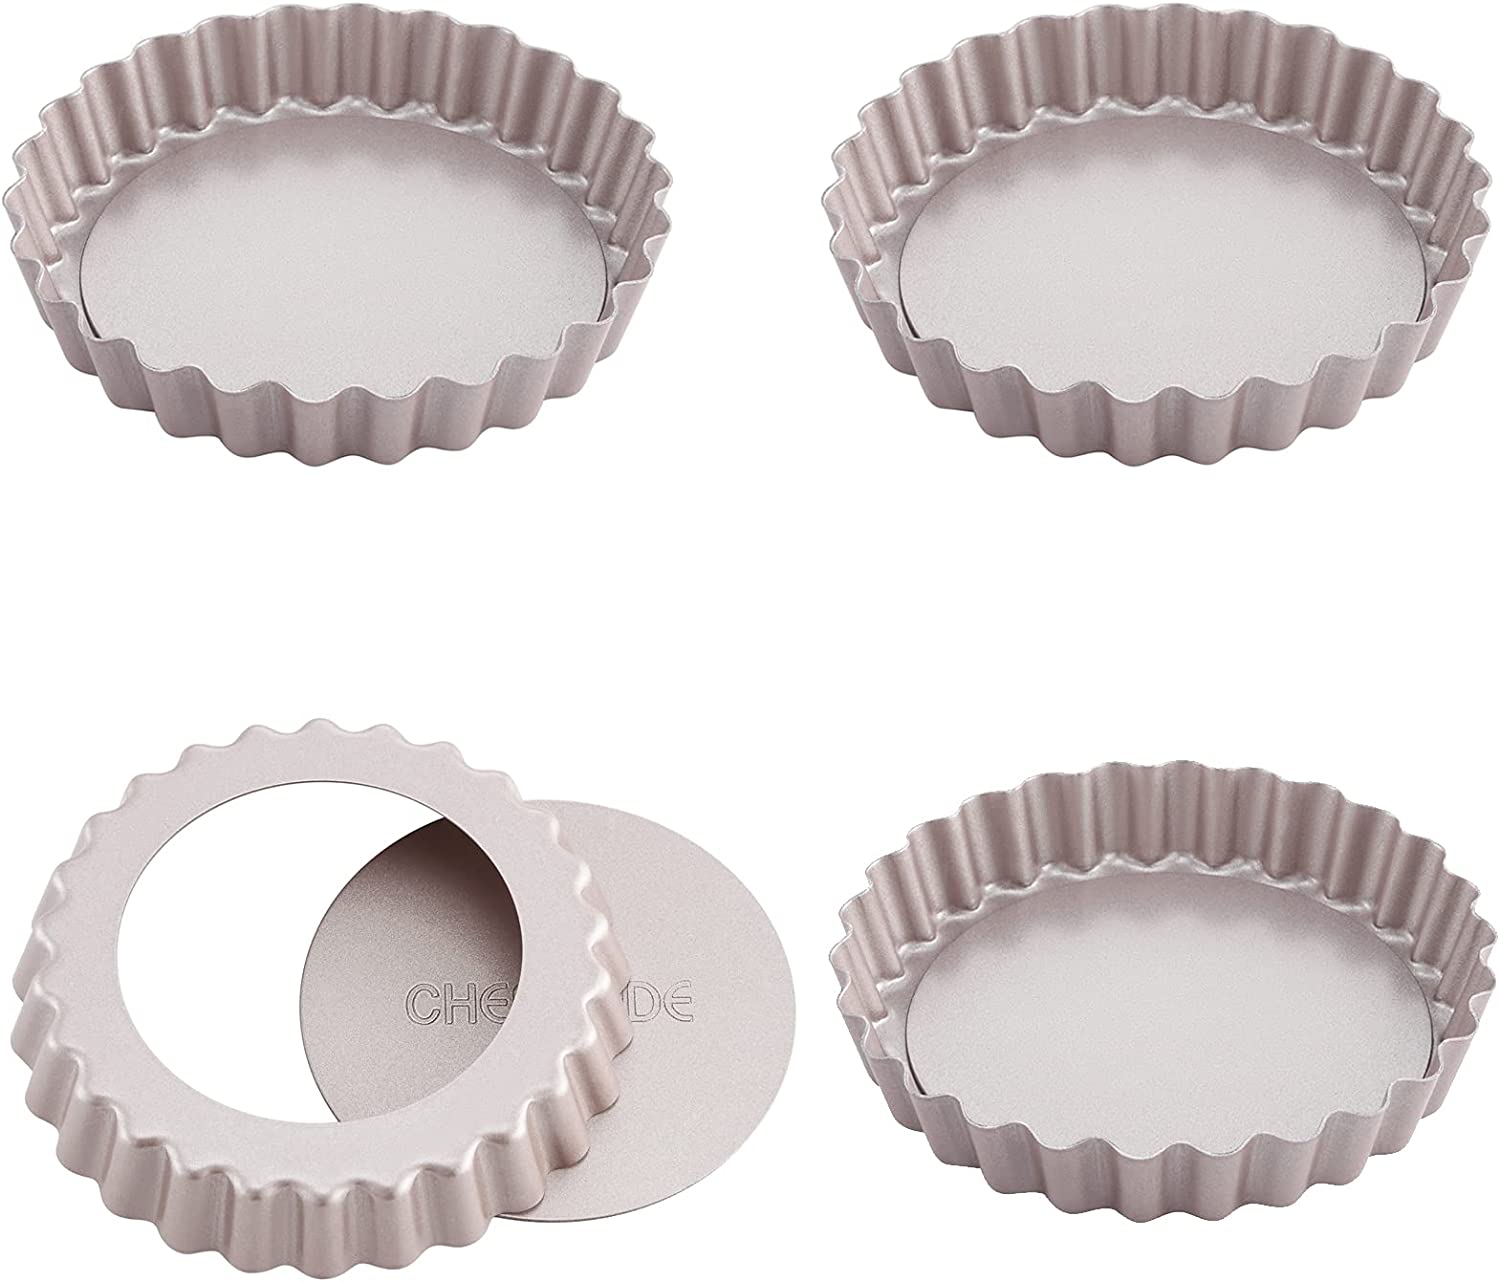 4 Mini Pie Pan Set Round Cone 4Pcs - CHEFMADE official store